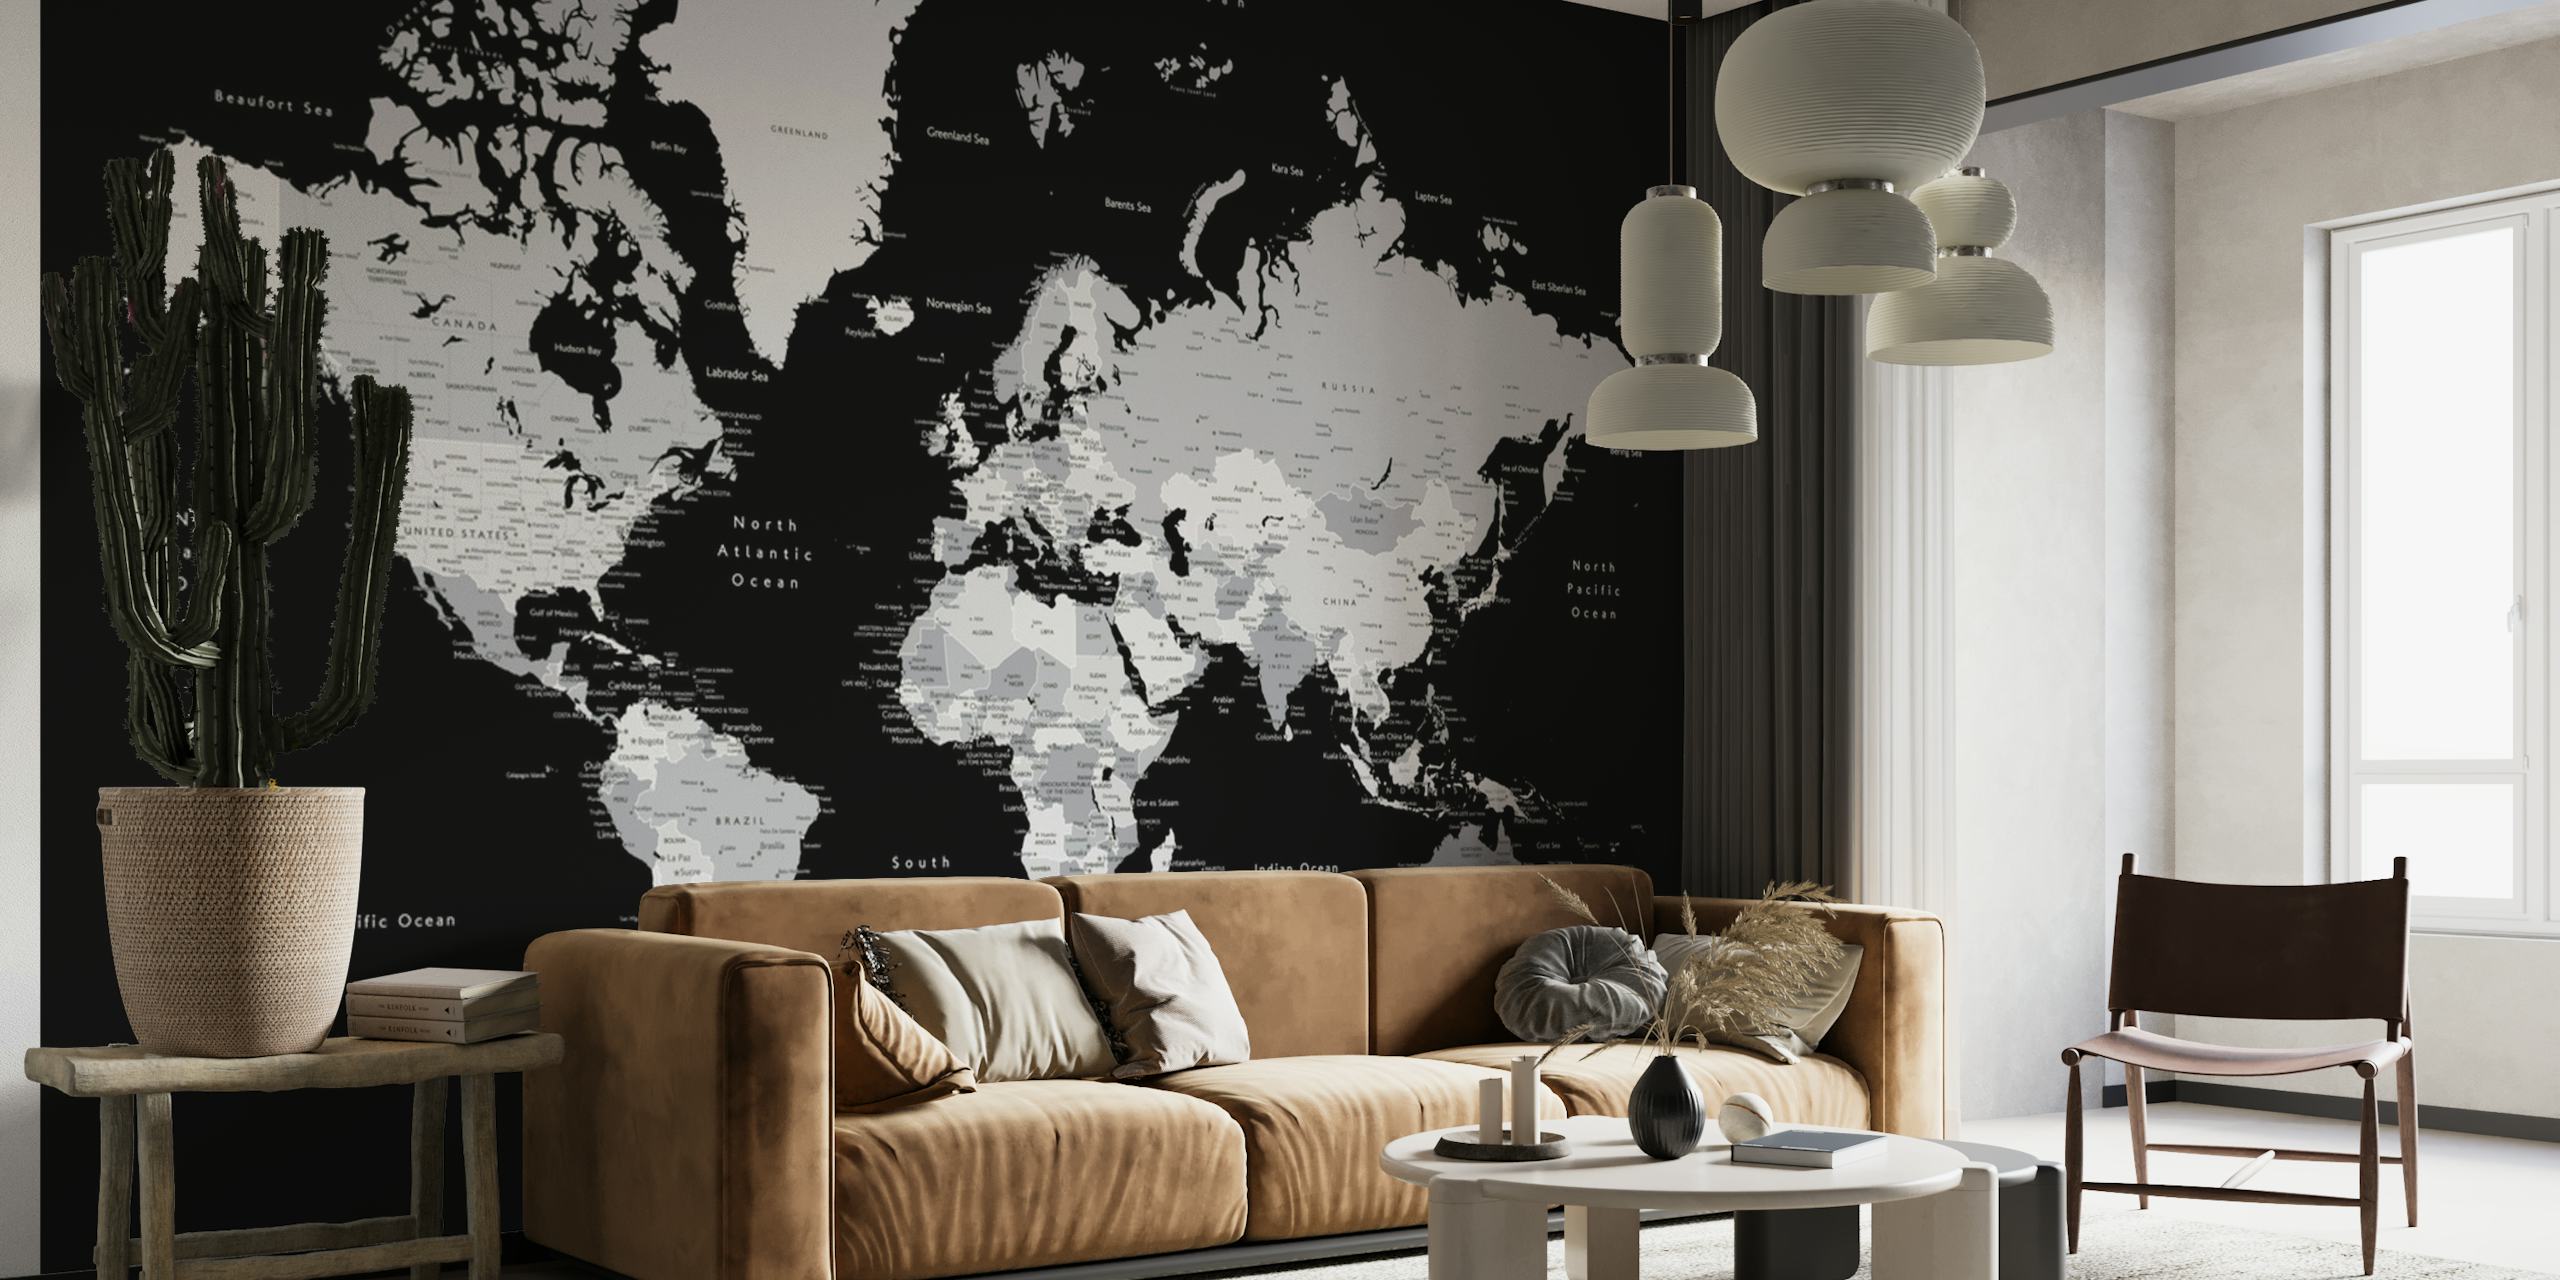 Joseph world map with cities wallpaper